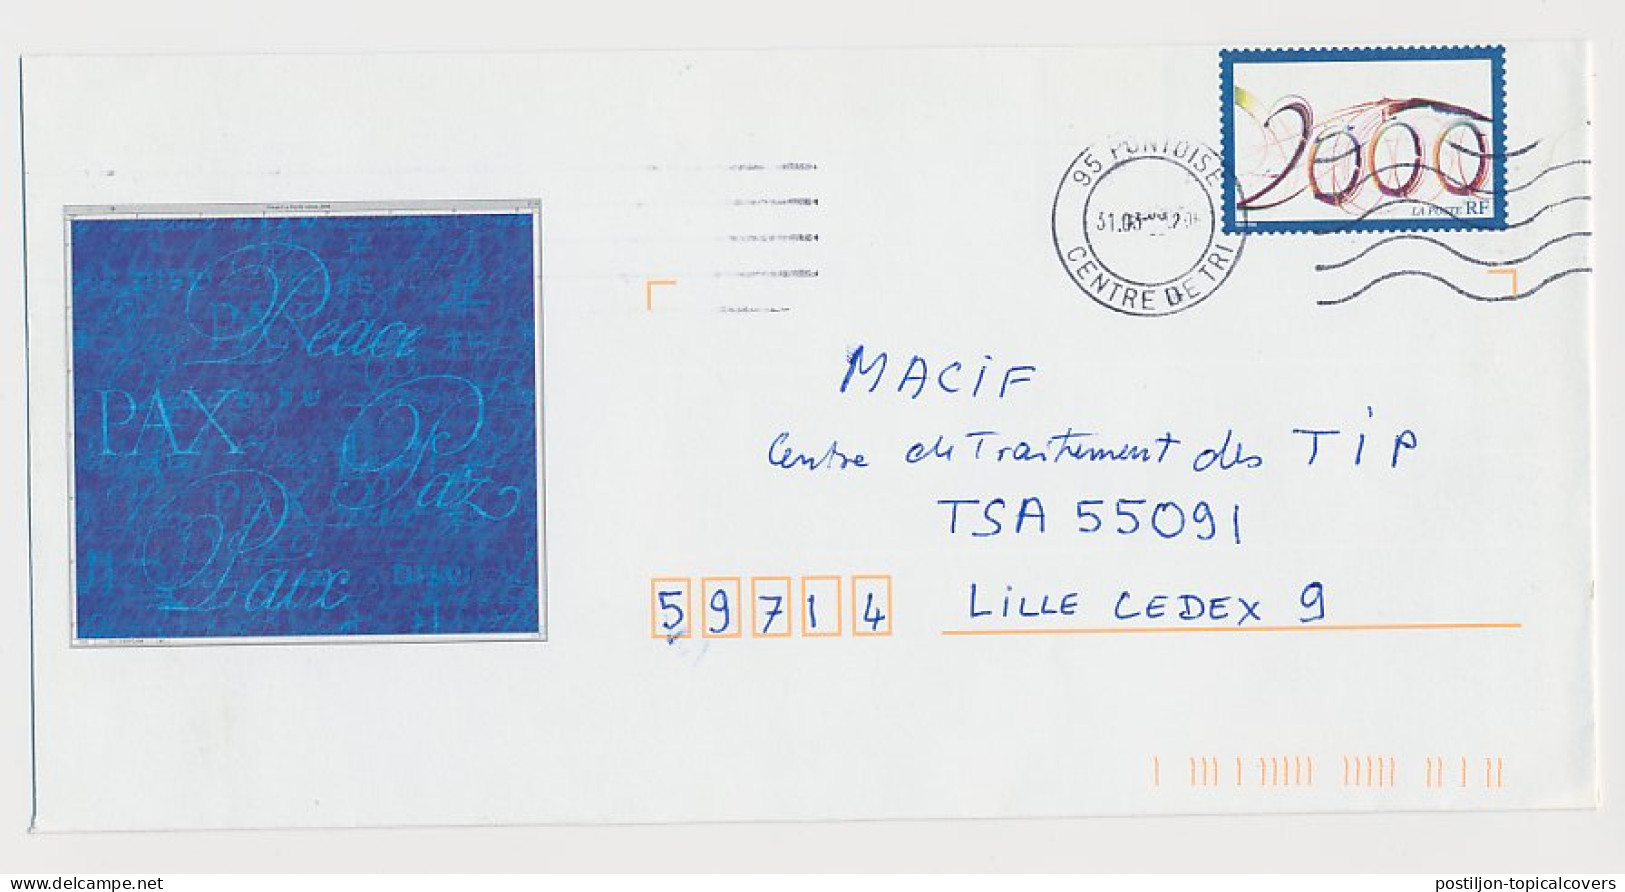 Postal Stationery France 2000 Peace - Non Classificati